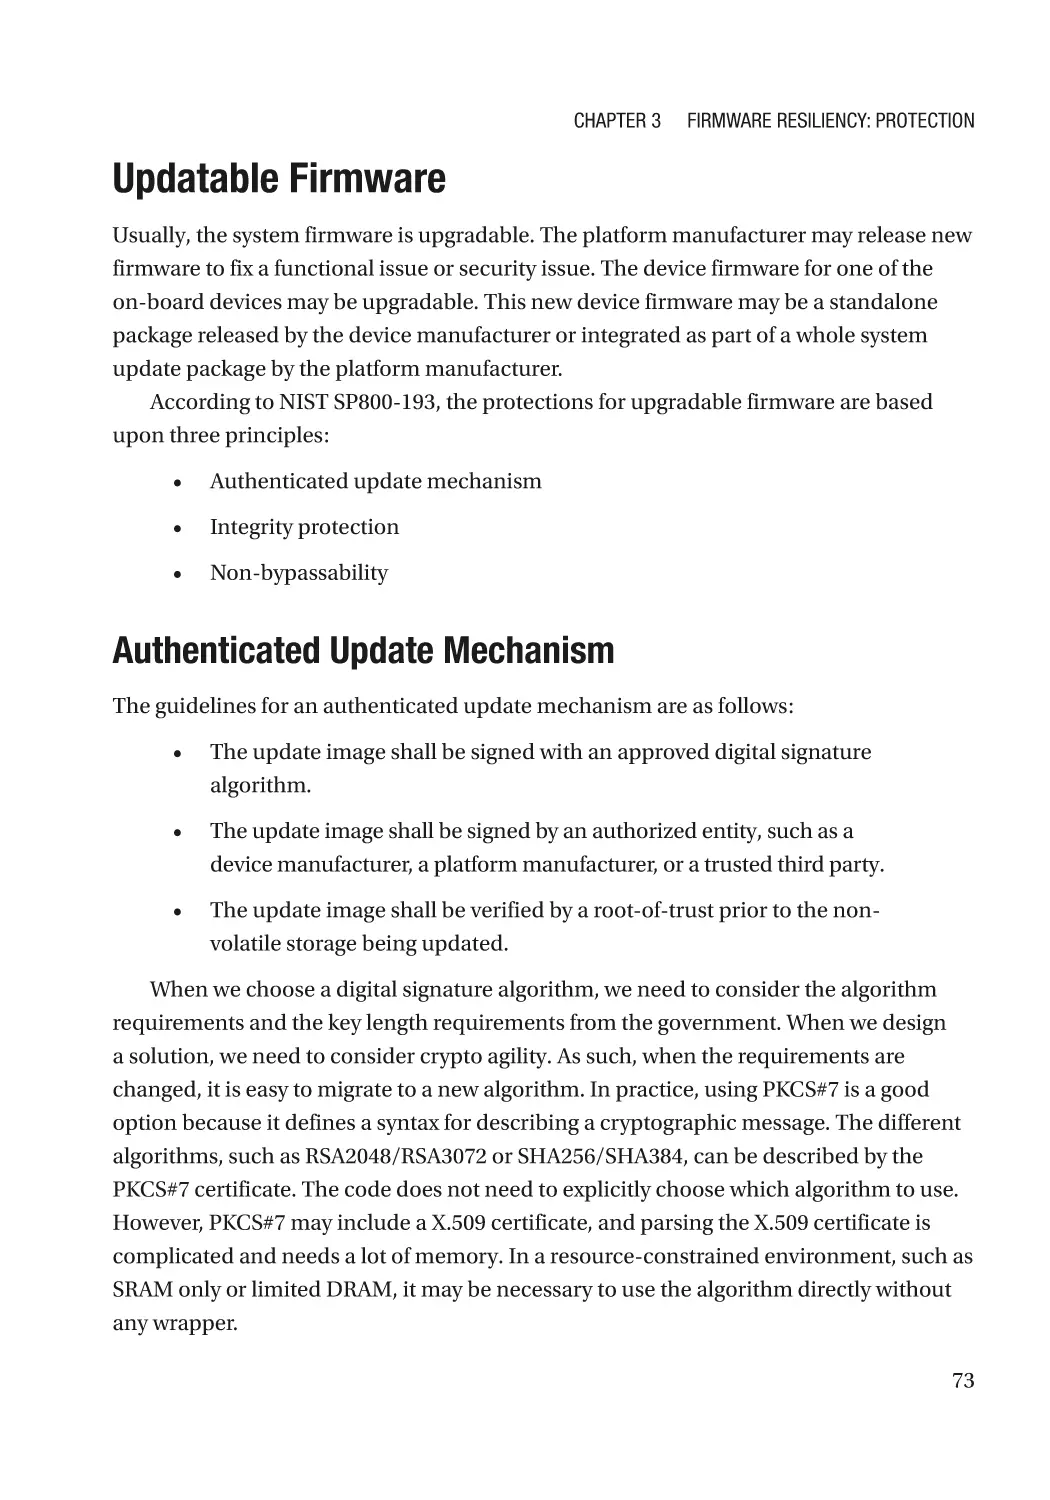 Updatable Firmware
Authenticated Update Mechanism